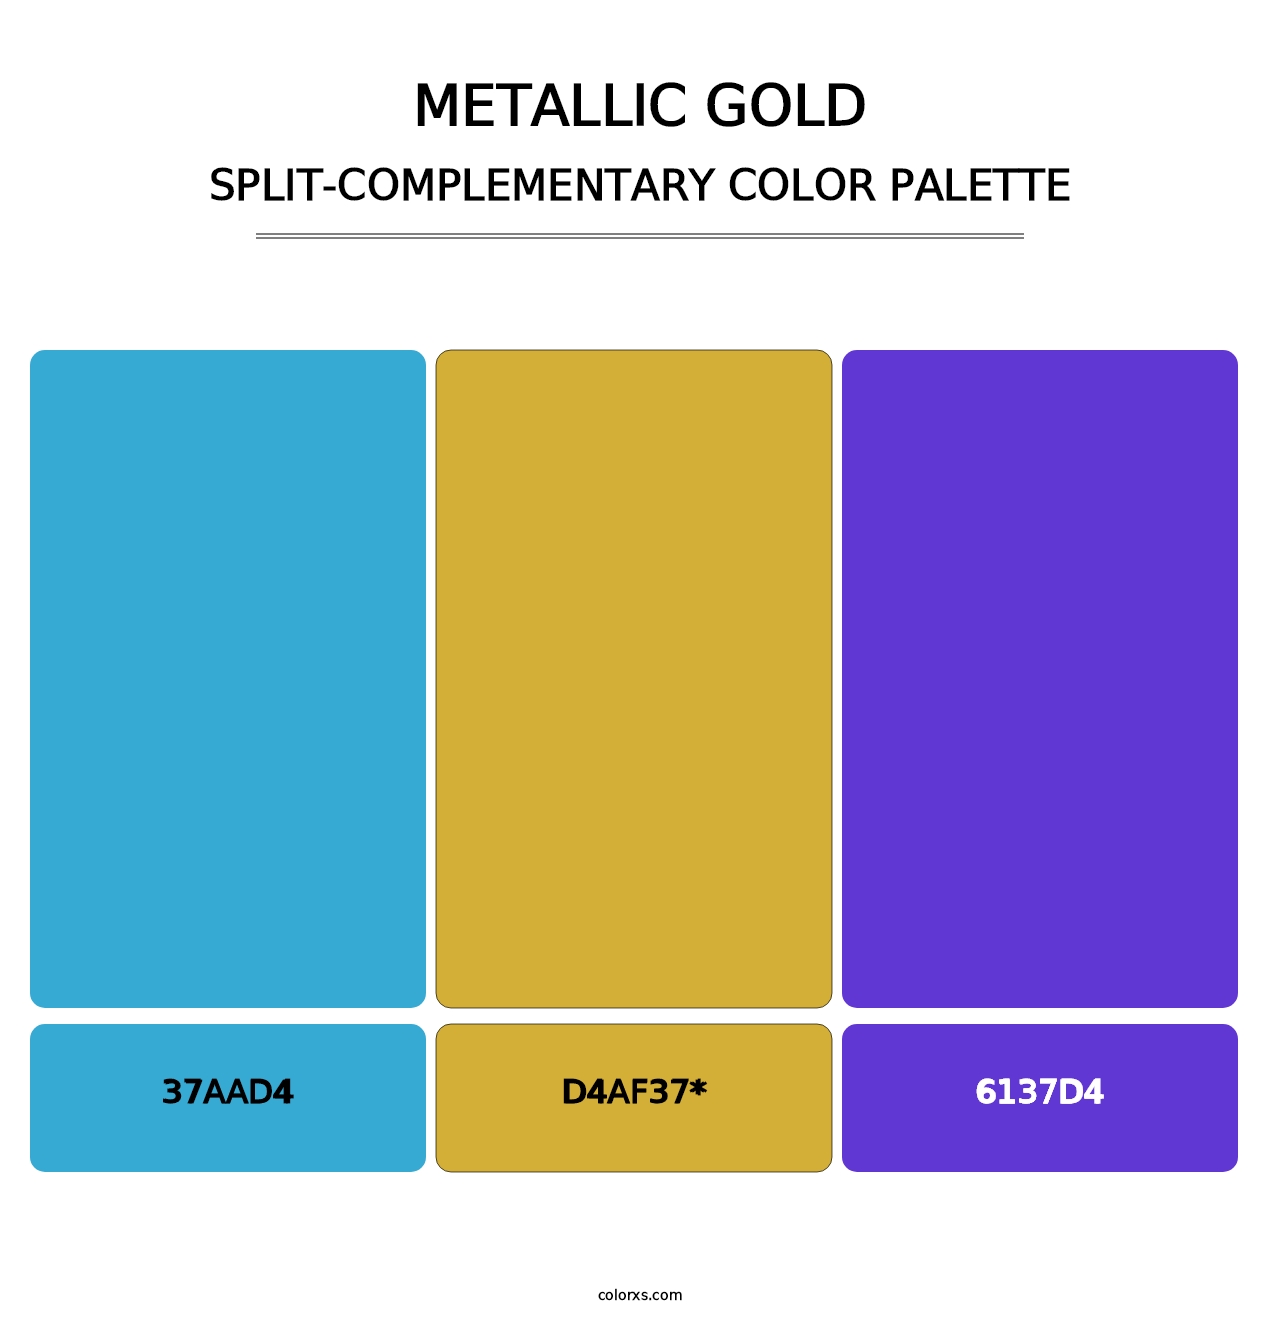 Metallic Gold - Split-Complementary Color Palette